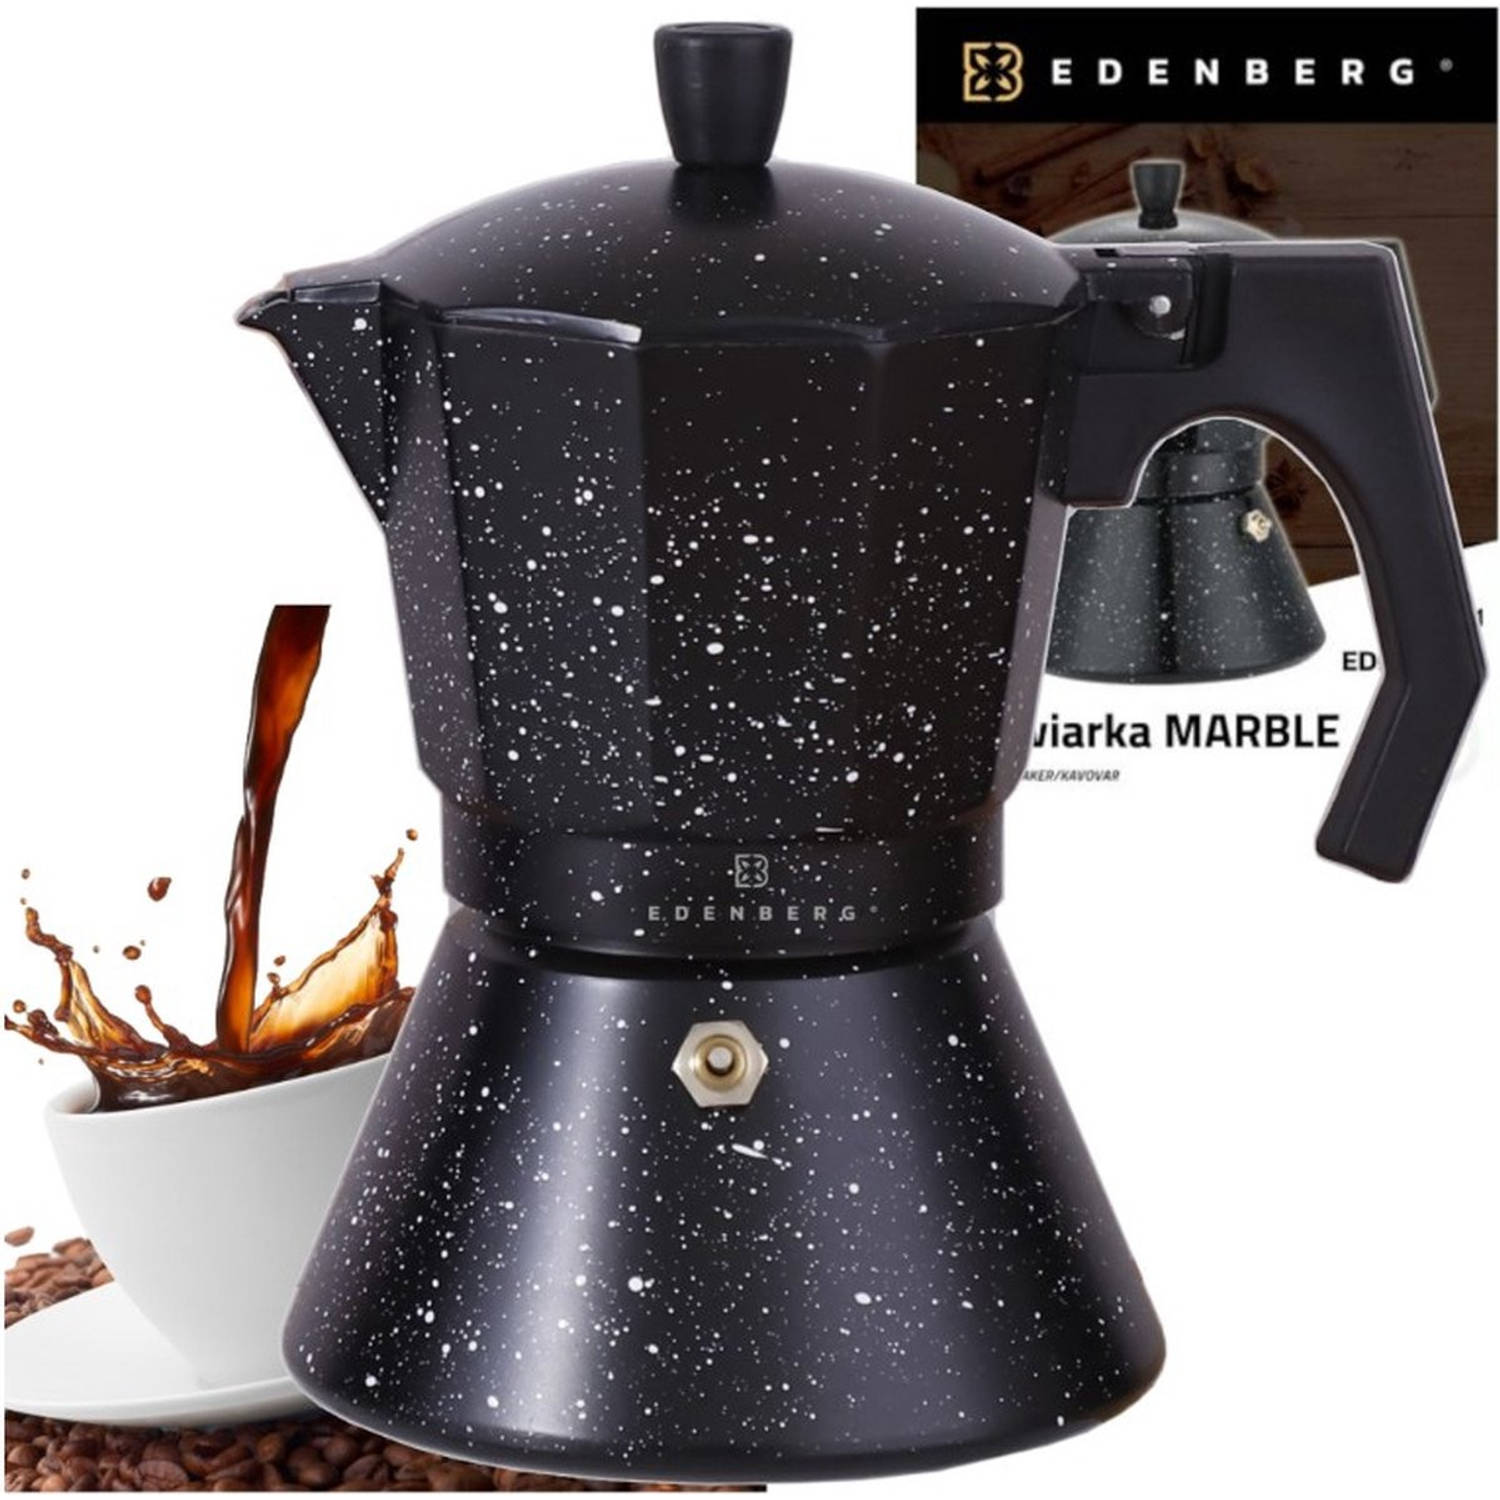 Edënbërg Stonetec Line - Percolator - Koffiemaker 9 kops - Espresso Maker 450 ML - Marmer Coating